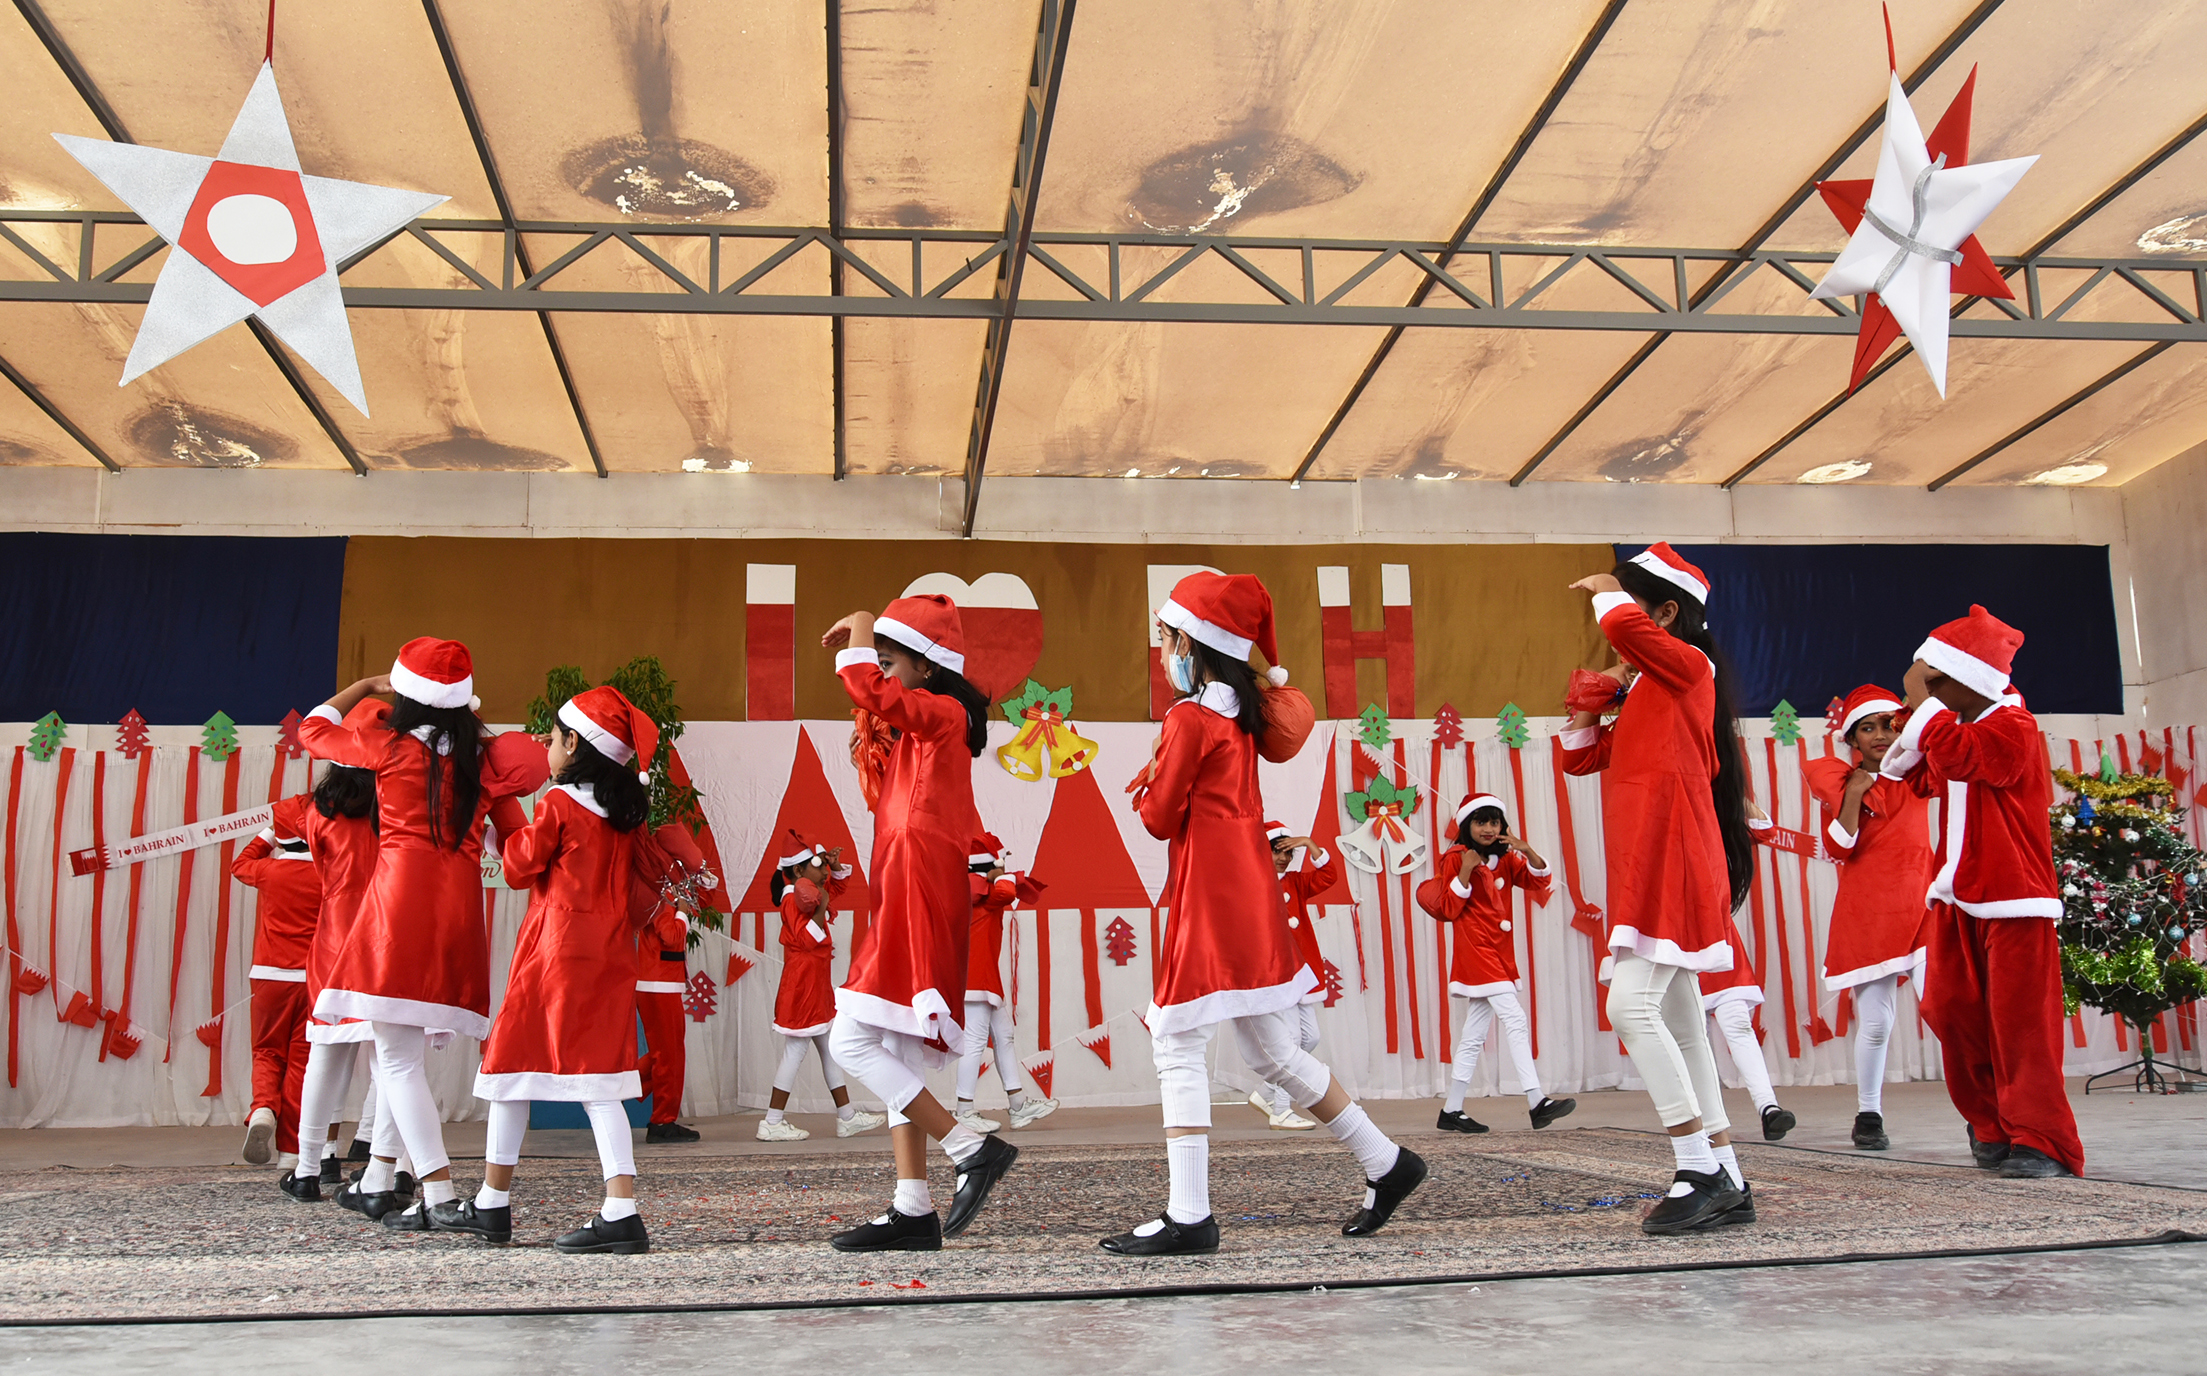 Bahrain National Day & Christmas Celebration Images